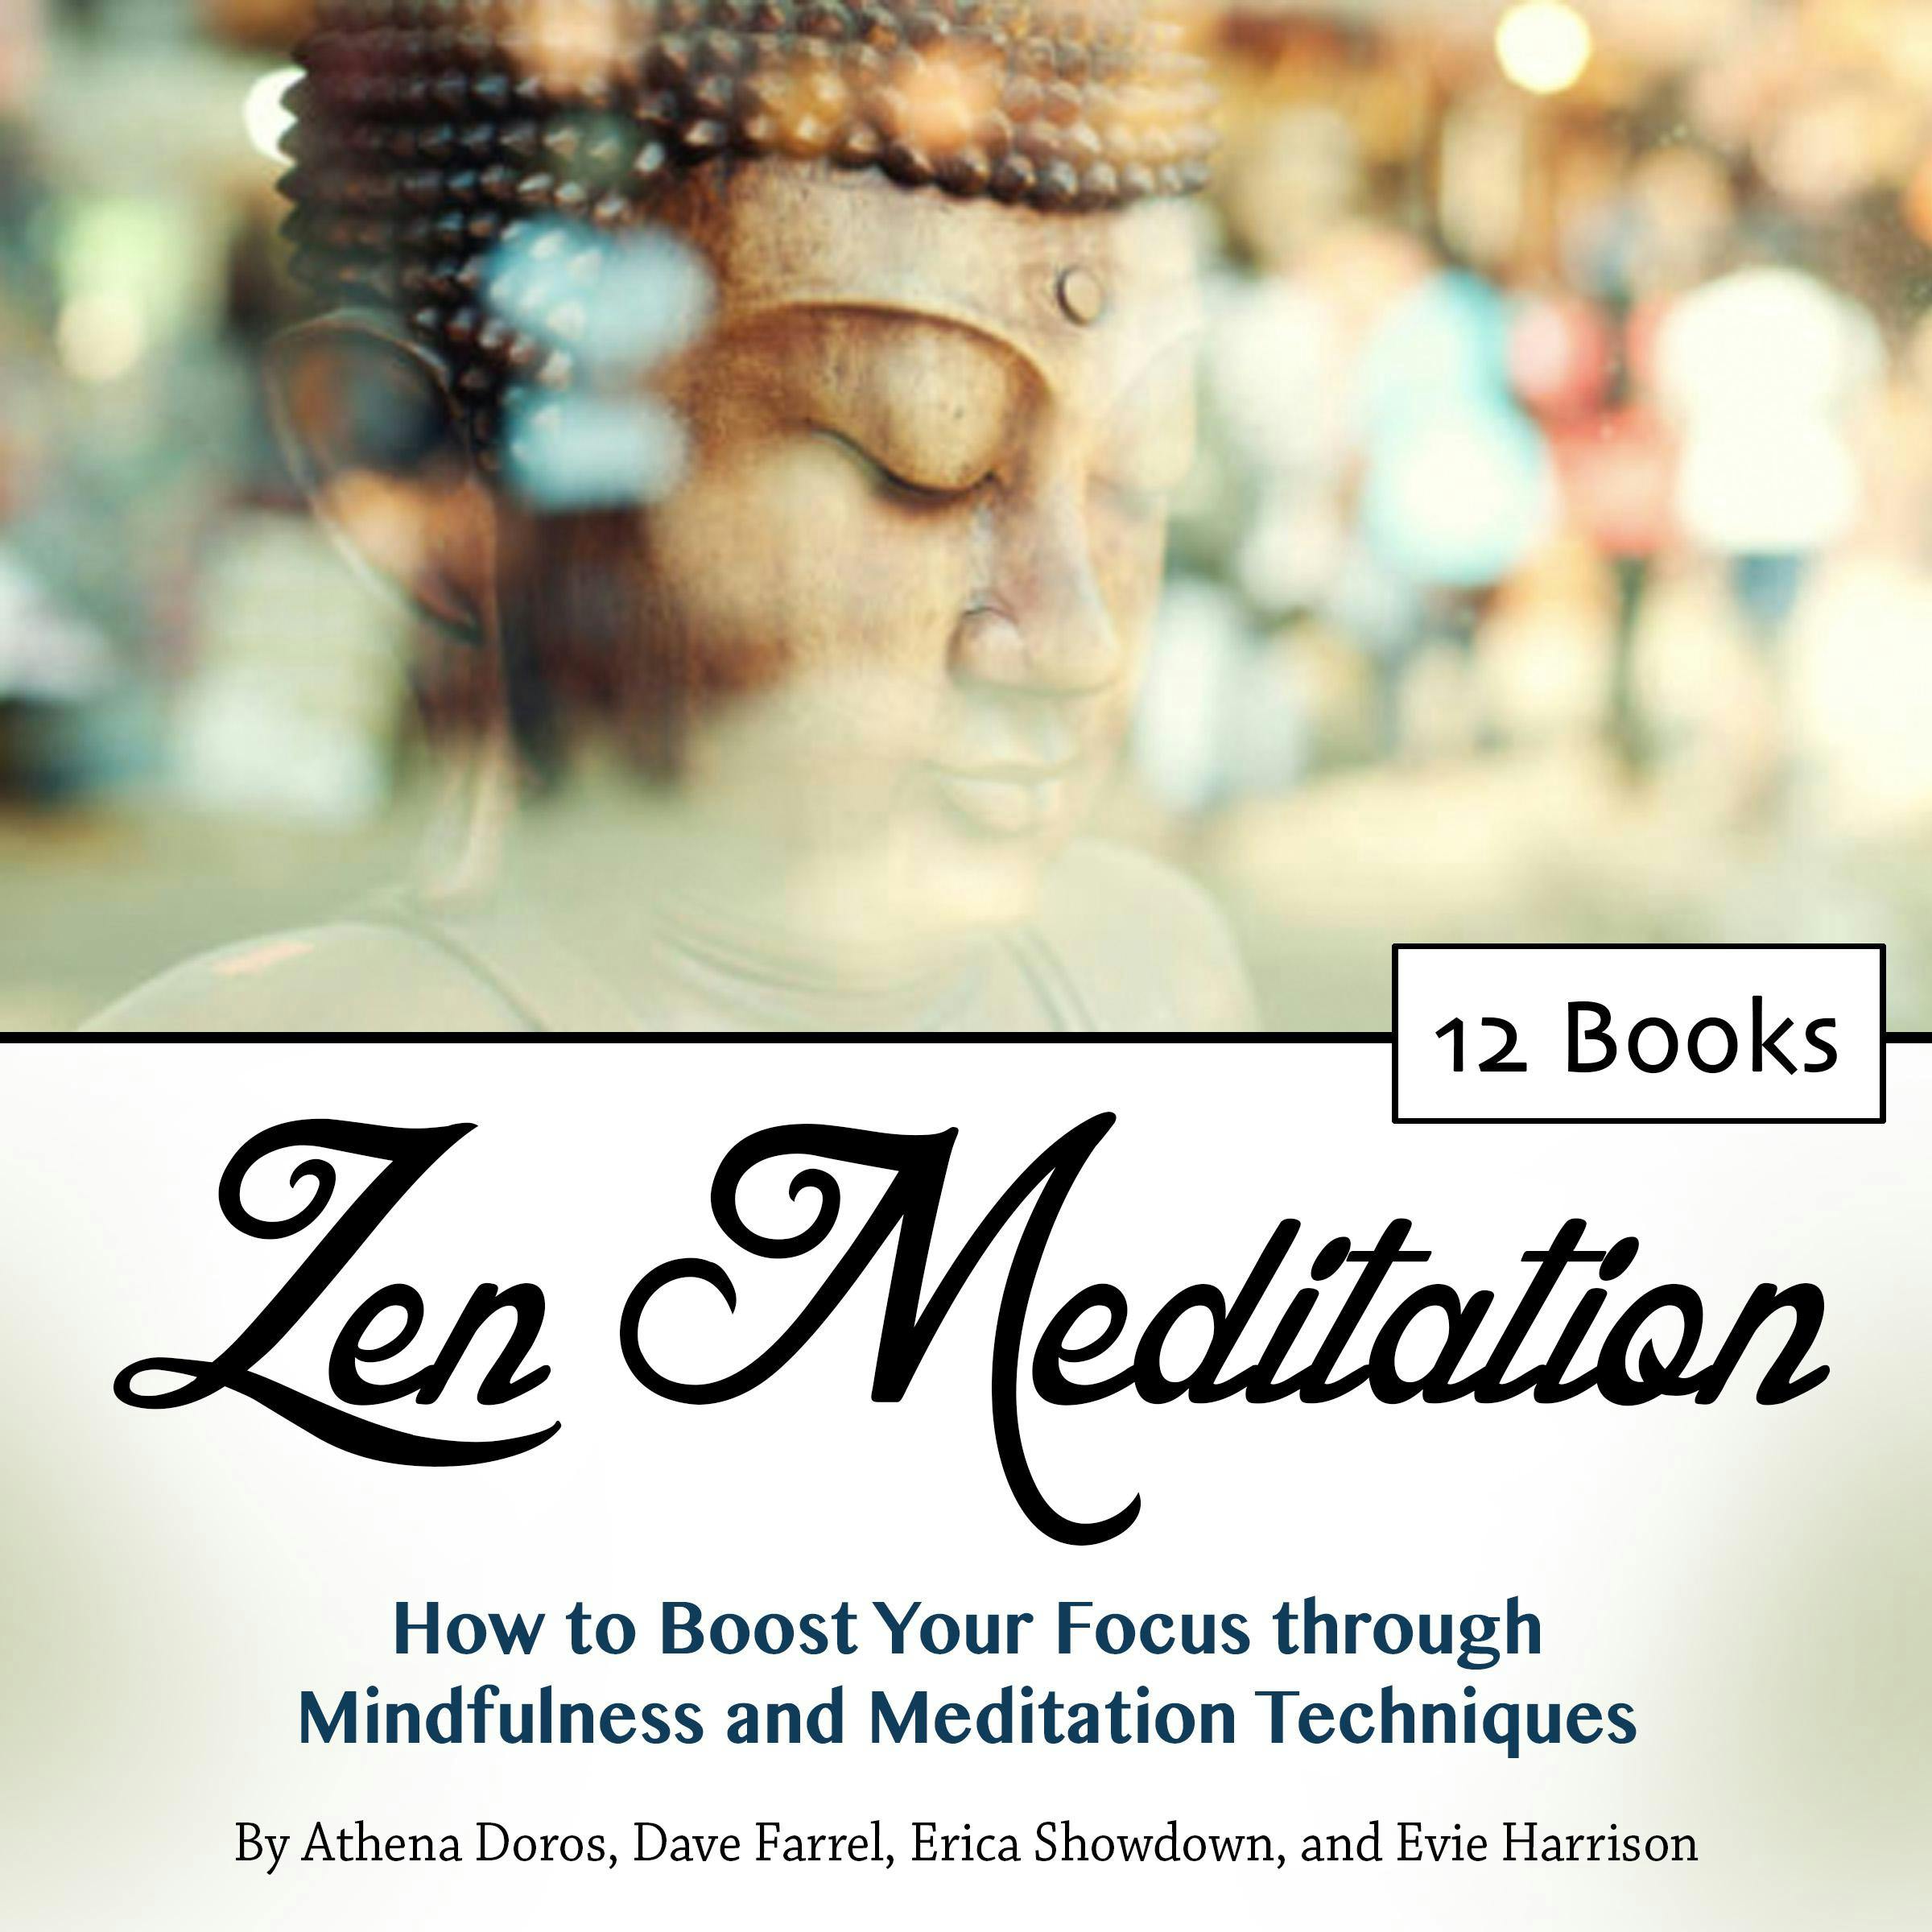 Zen Meditation: How to Boost Your Focus through Mindfulness and Meditation Techniques - Athena Doros, Erica Showdown, Dave Farrel, Evie Harrison